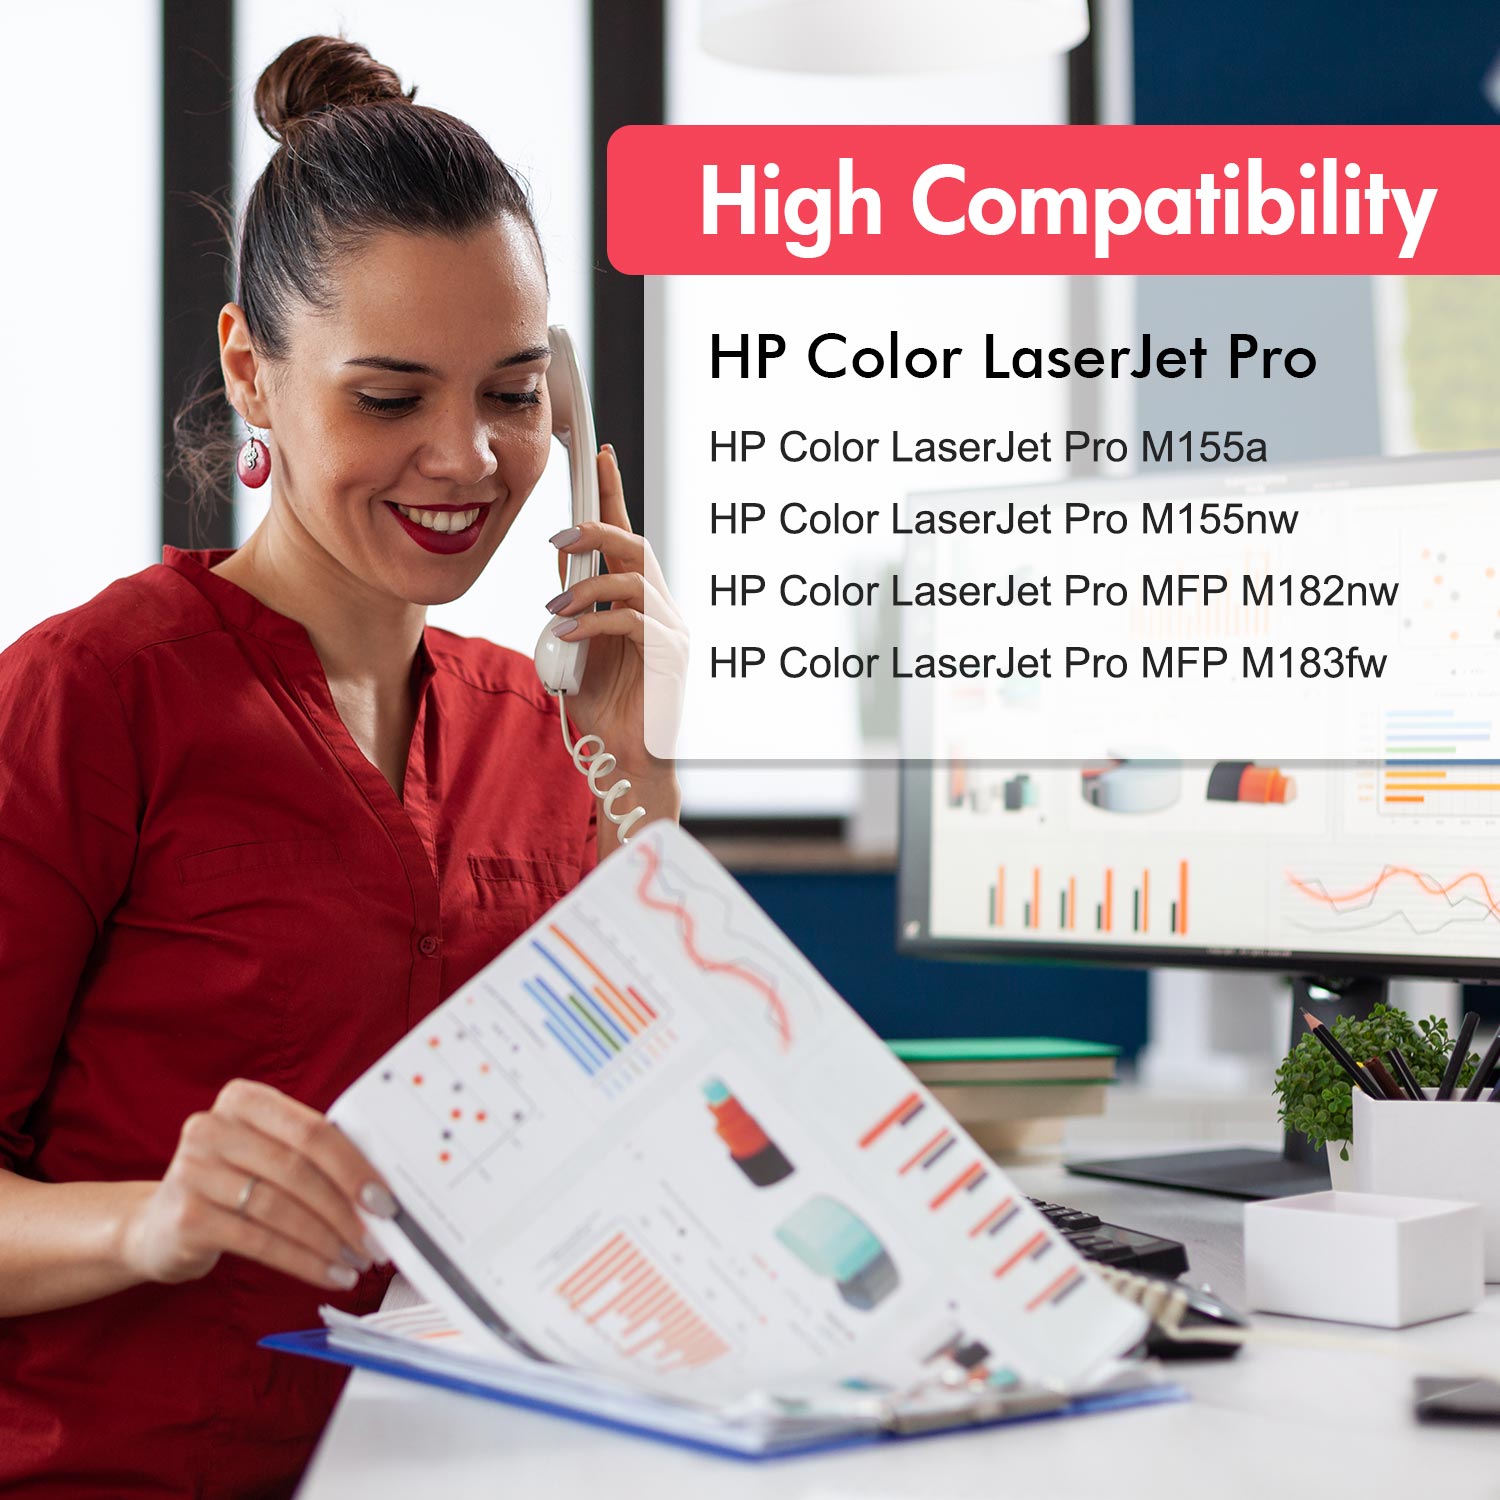 HP Color LaserJet Pro MFP M183fw Printer Price in Bangladesh